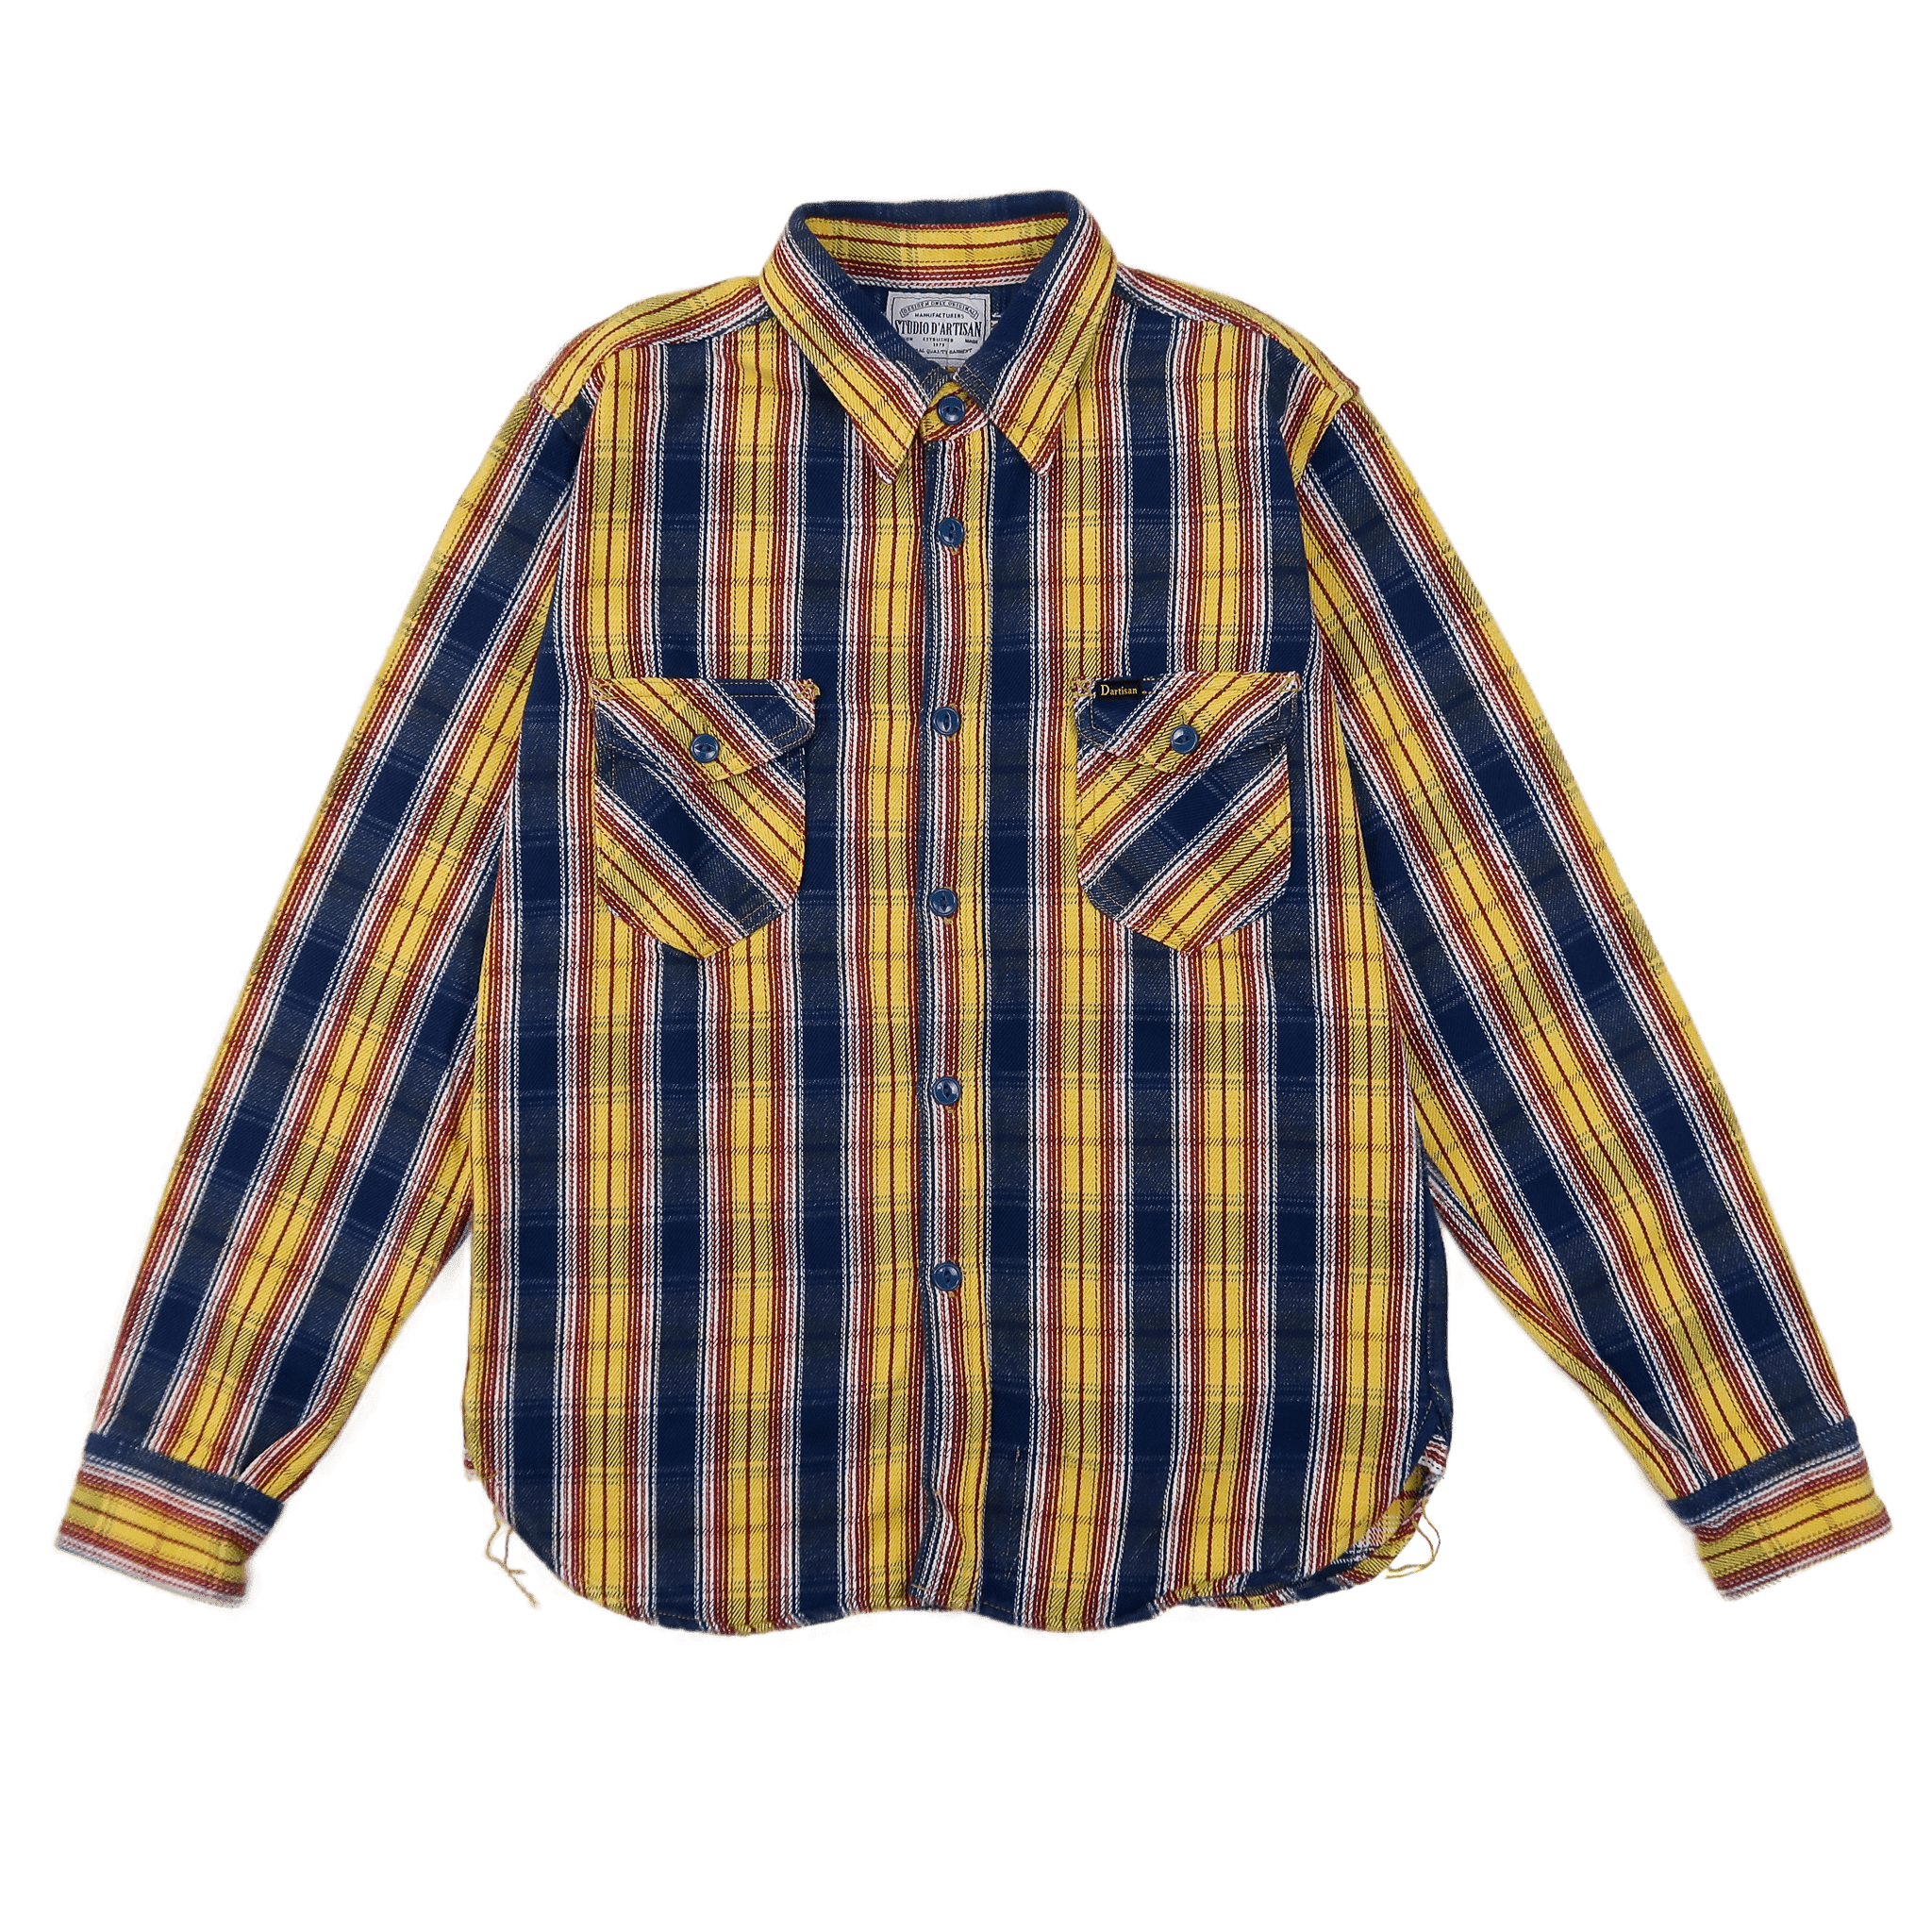 Tartan Check Shirt (Yellow/Blue/Red)